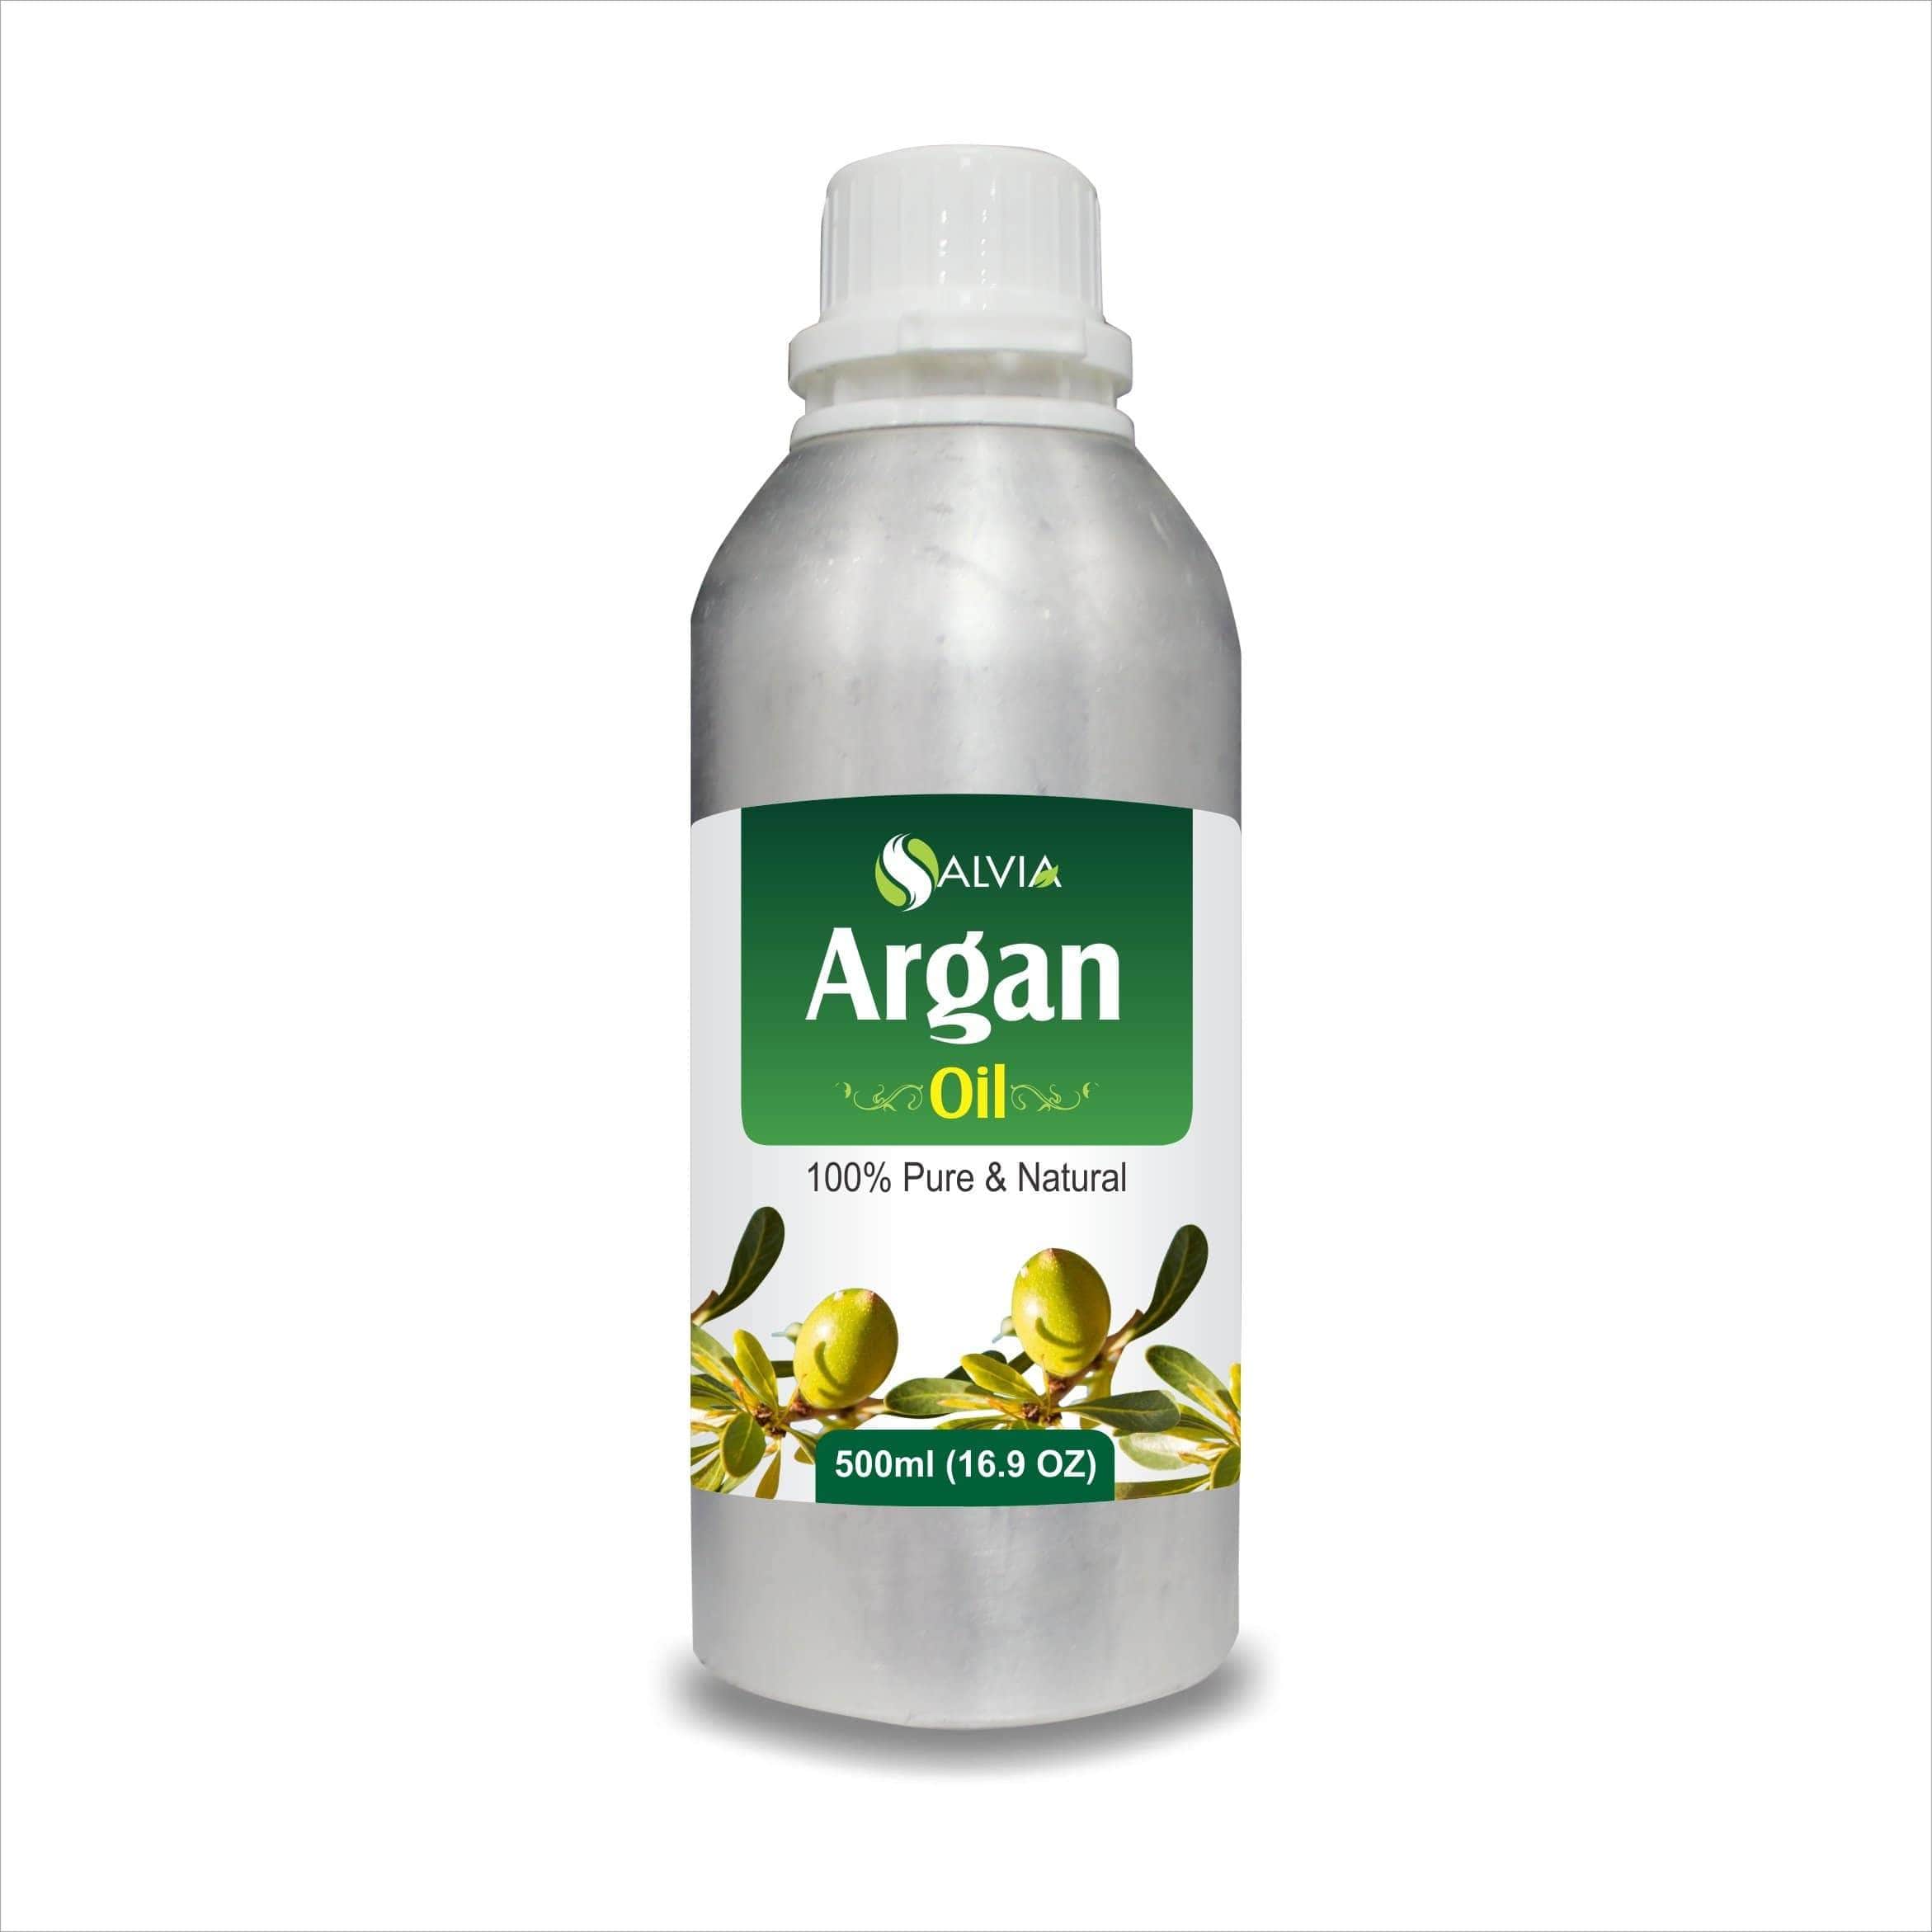 argan oil benefits - Shoprythm